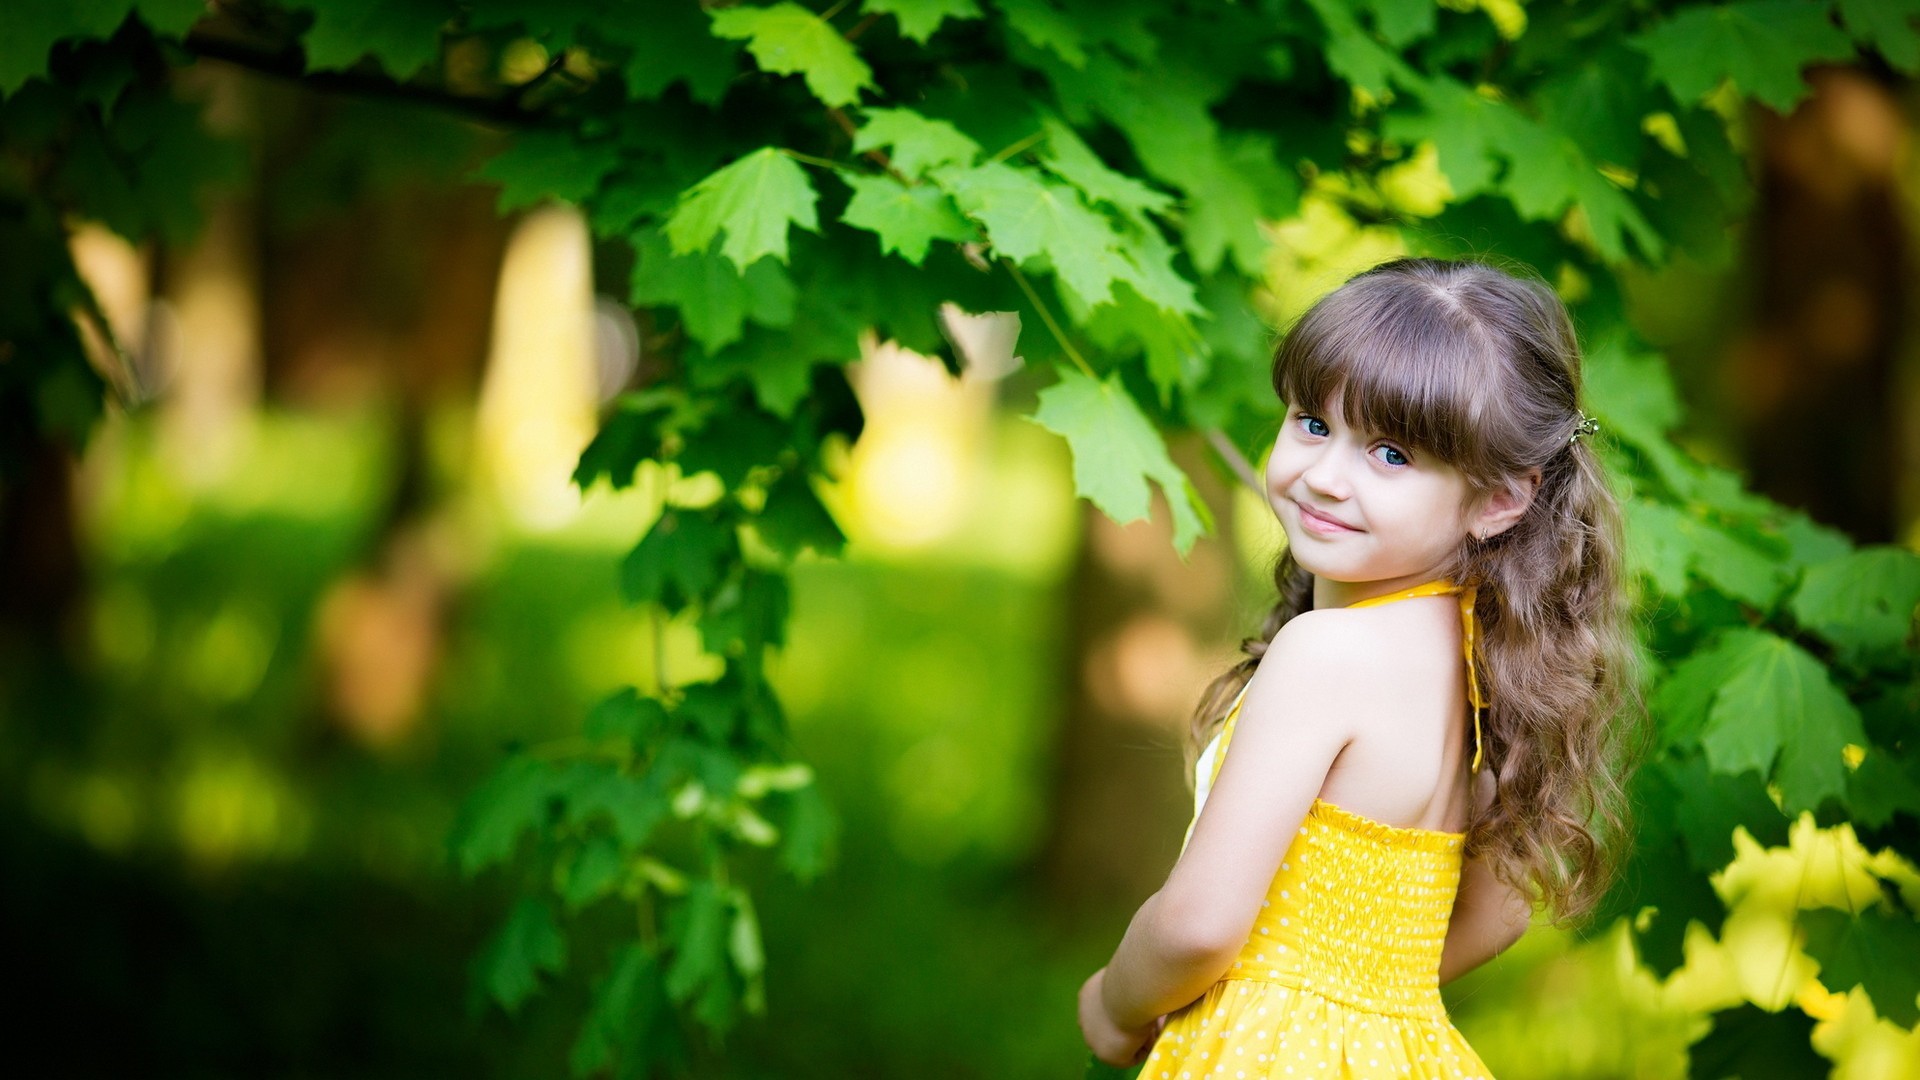 children leaves yellow dress bangs smiling Wallpaper